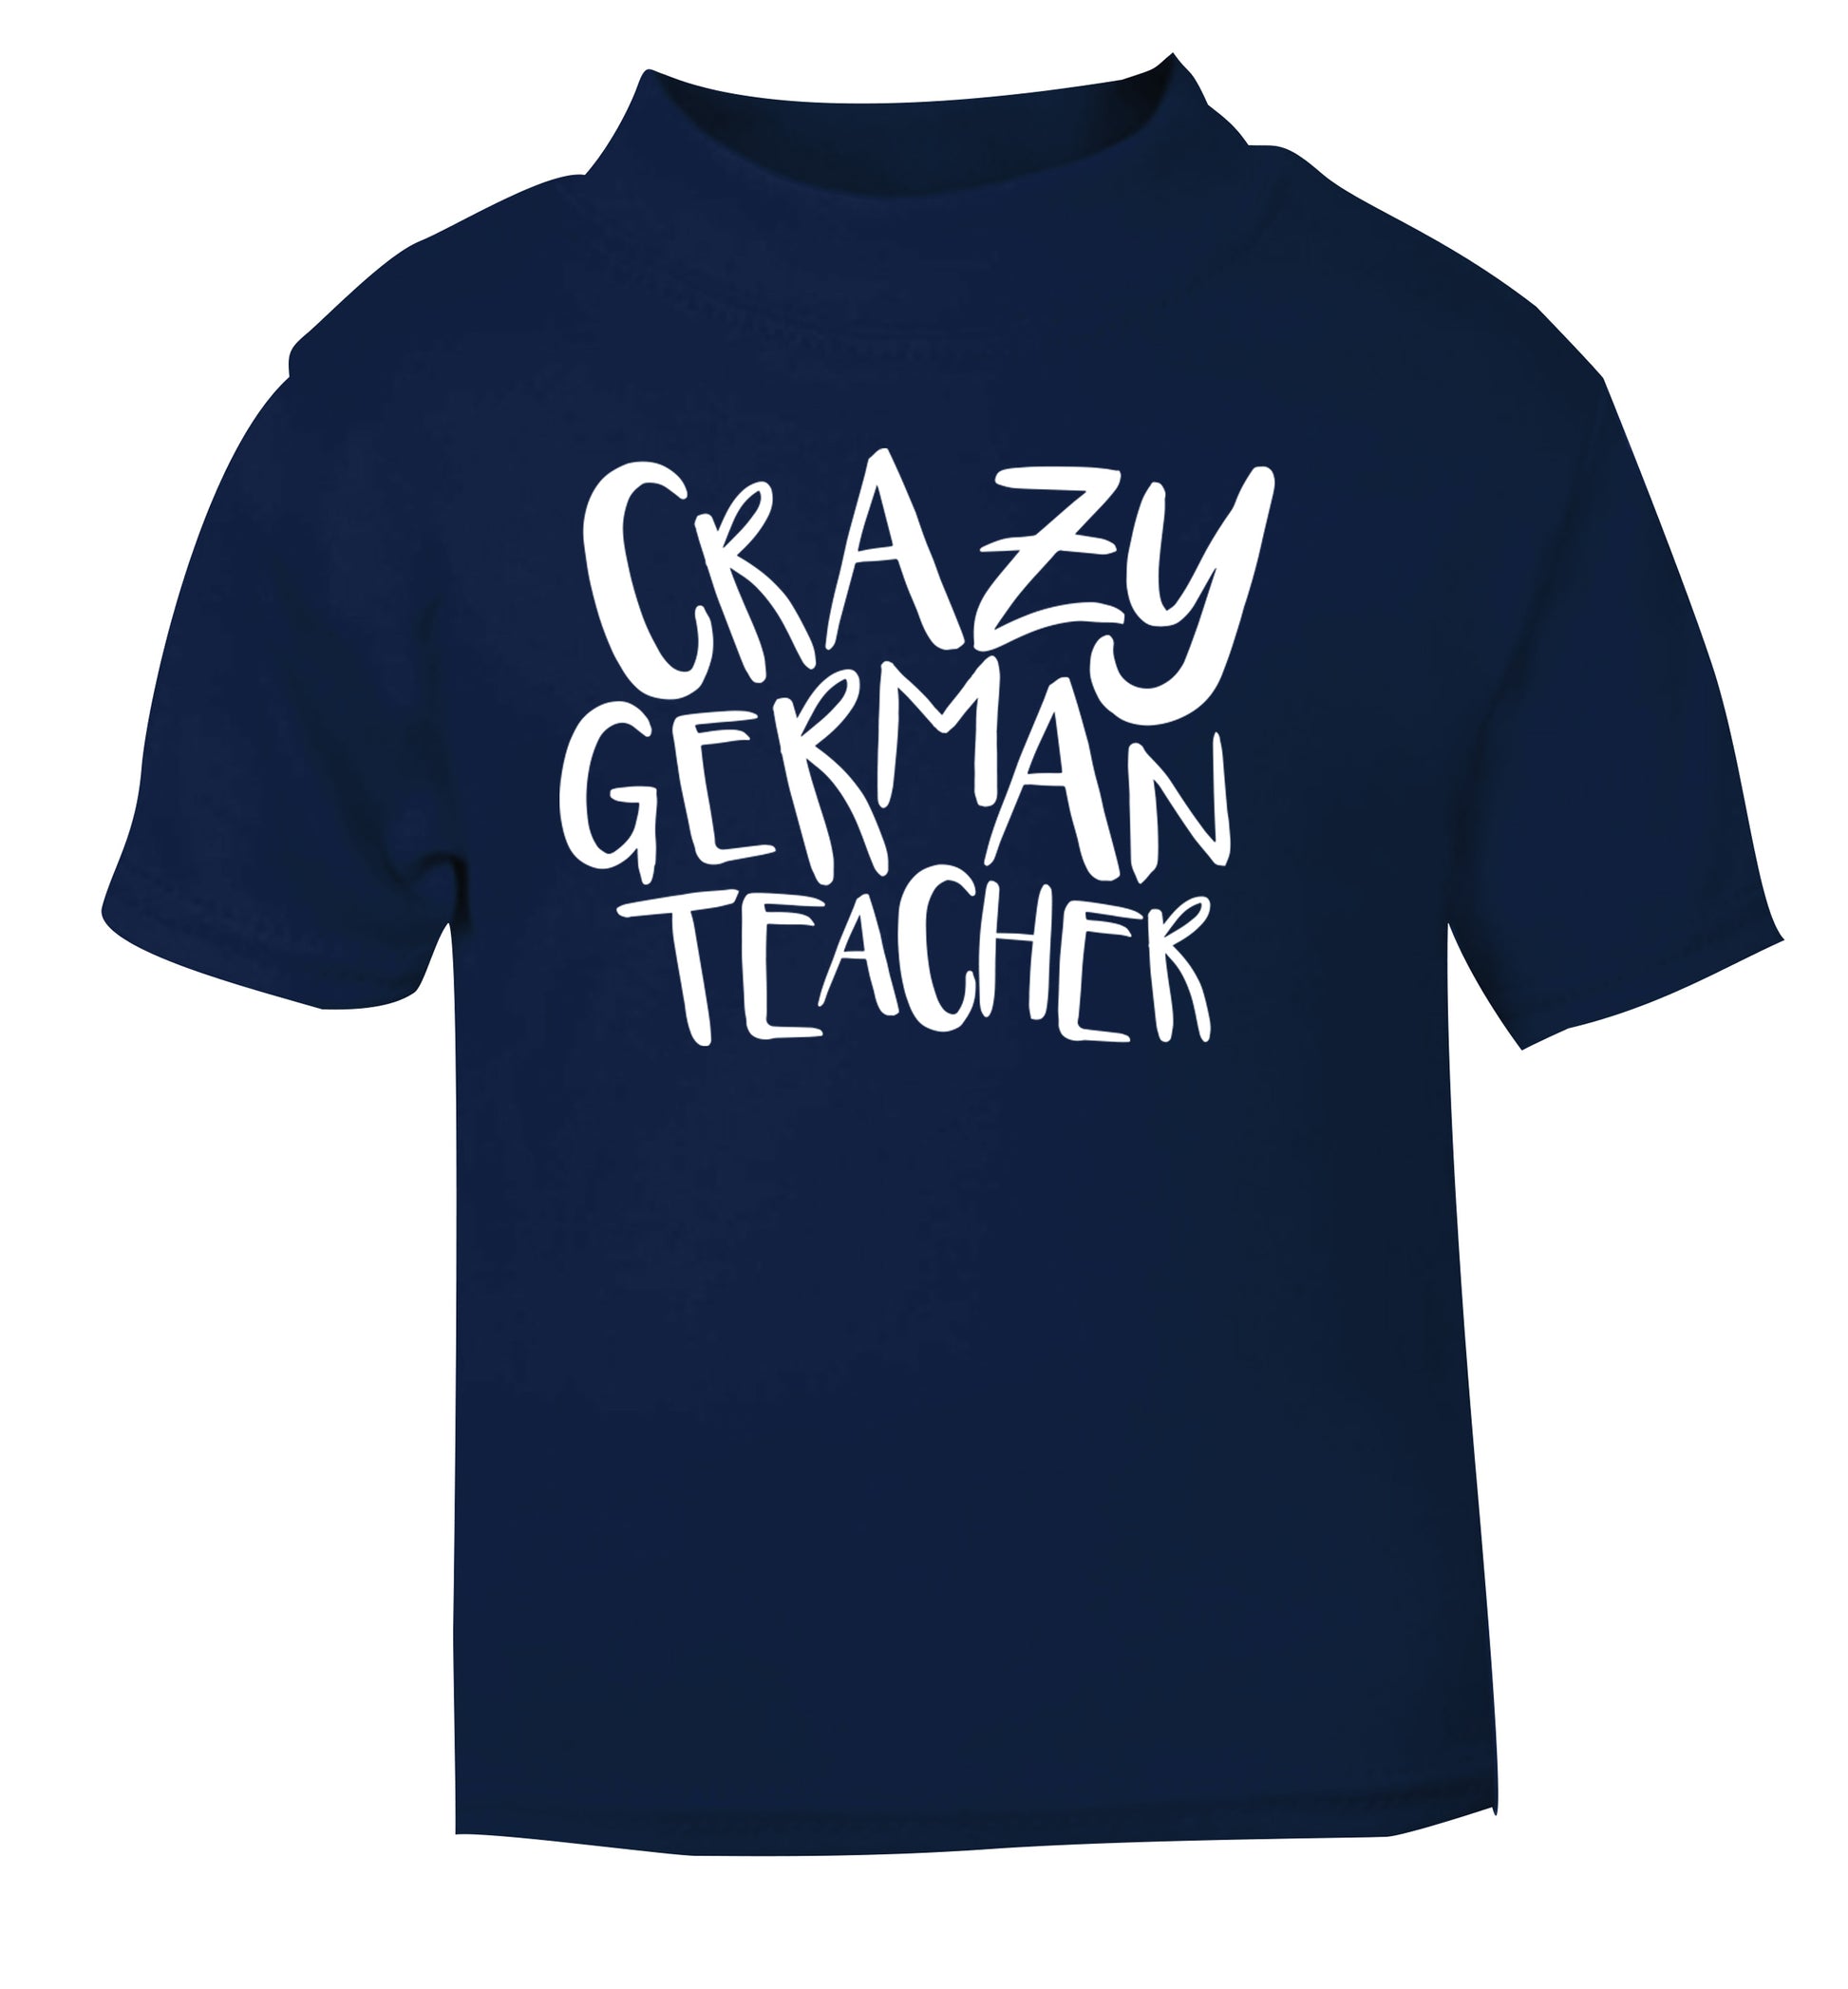 Crazy german teacher navy Baby Toddler Tshirt 2 Years